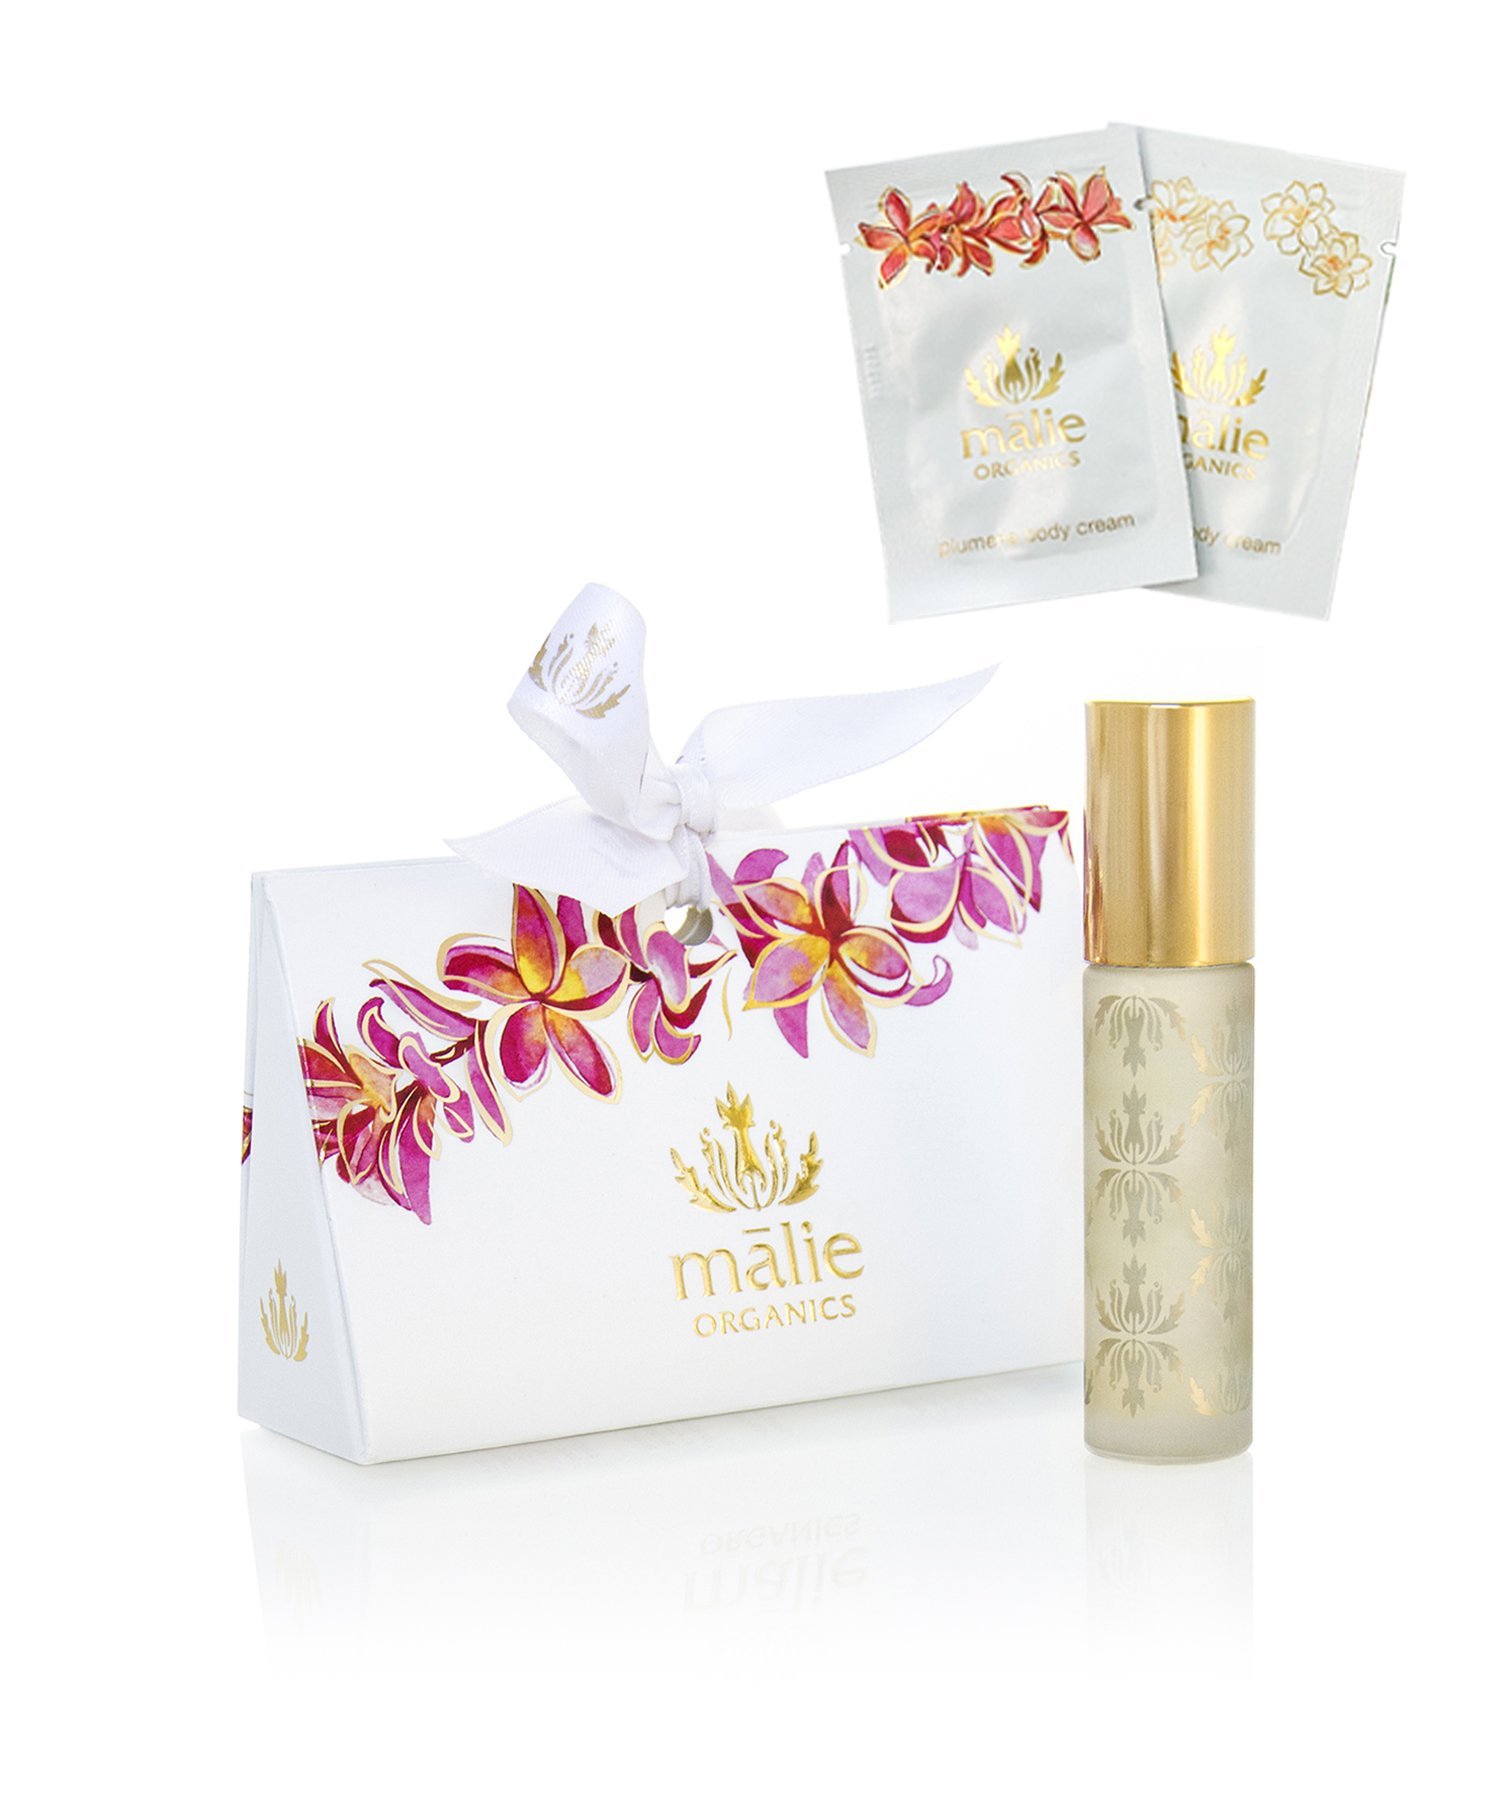 Malie Organics (公式)Perfume Oil Plumeria ギフトキット マリエオーガ二クス フレグランス 香水 ブルー【送料無料】